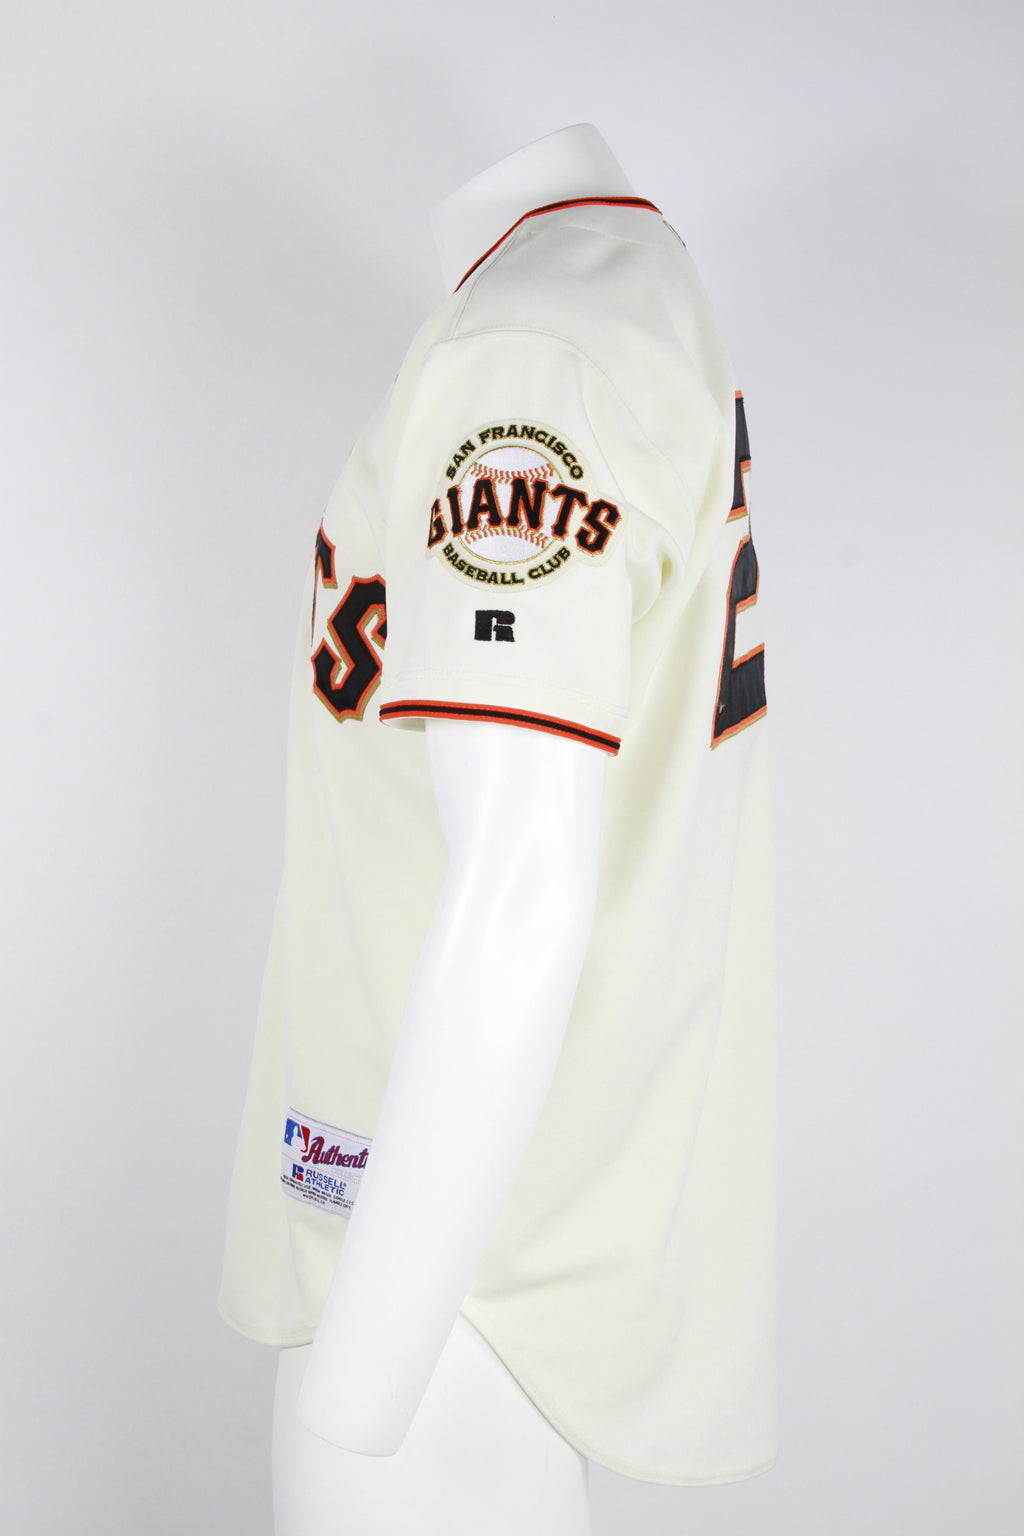 Barry Bonds San Francisco Giants Jersey – Classic Authentics